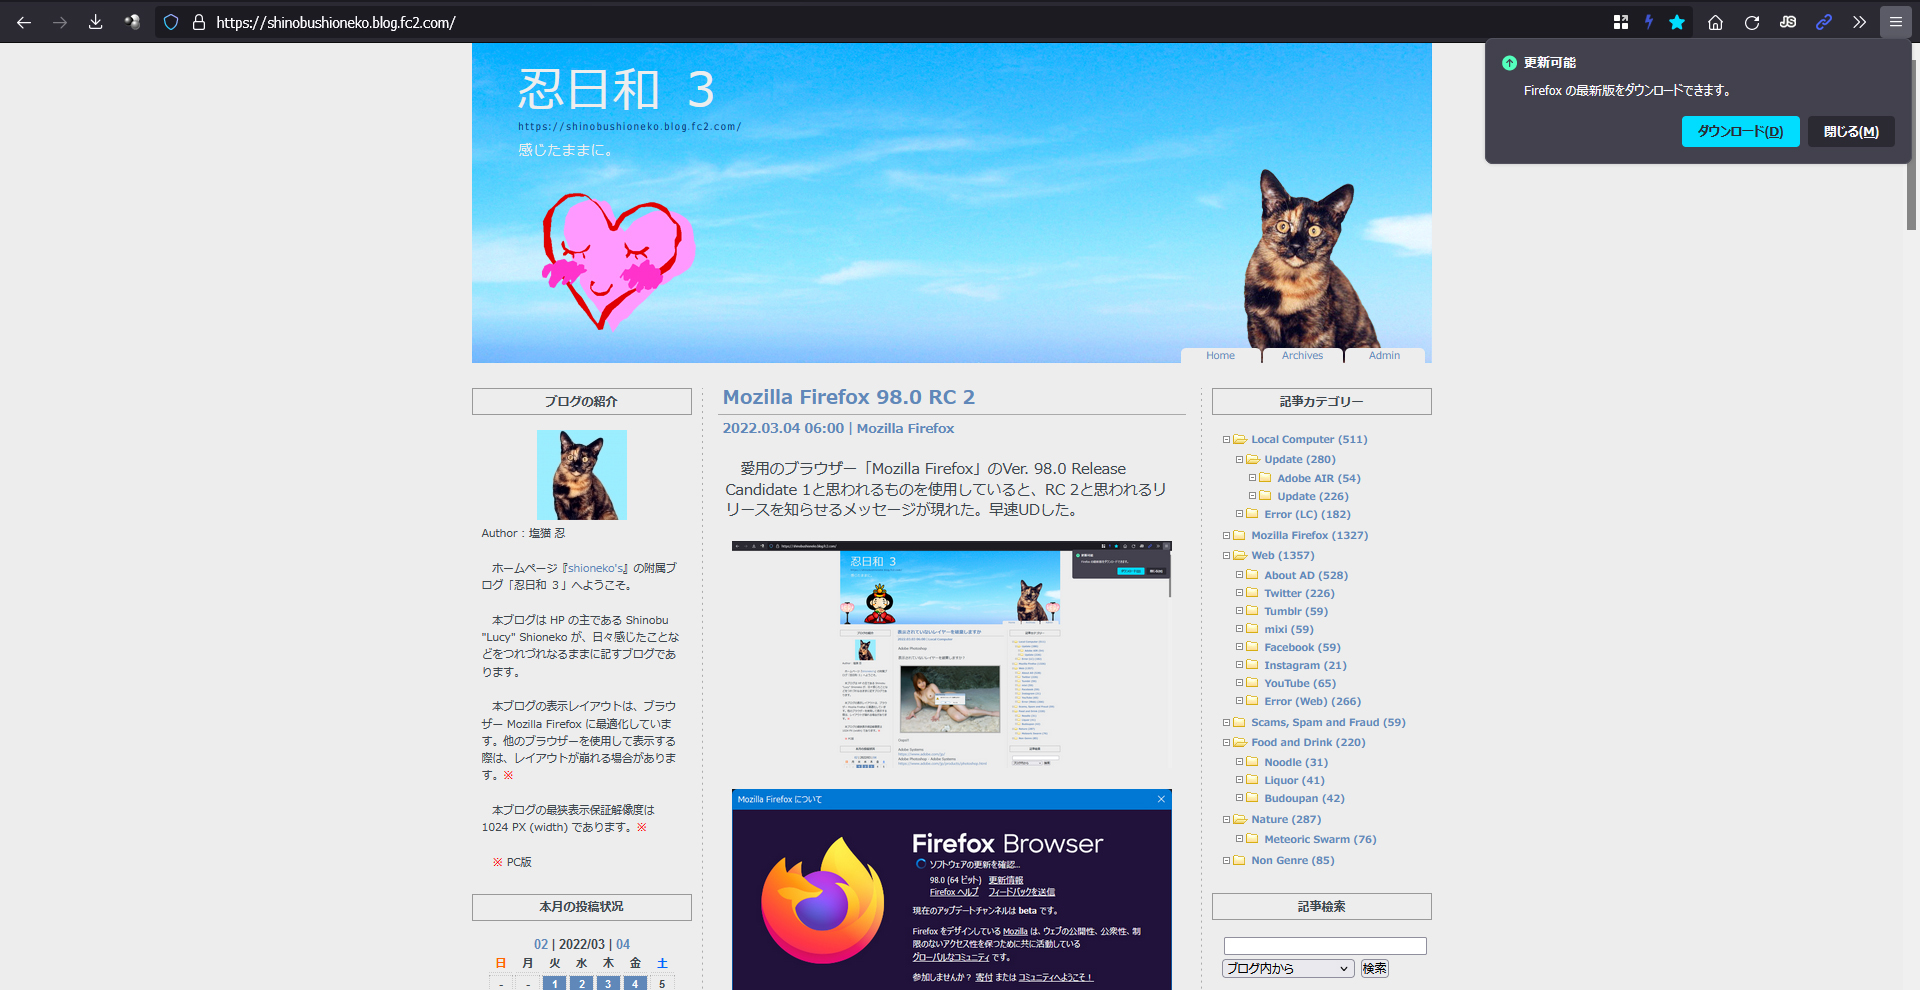 Mozilla Firefox 98.0 RC 3